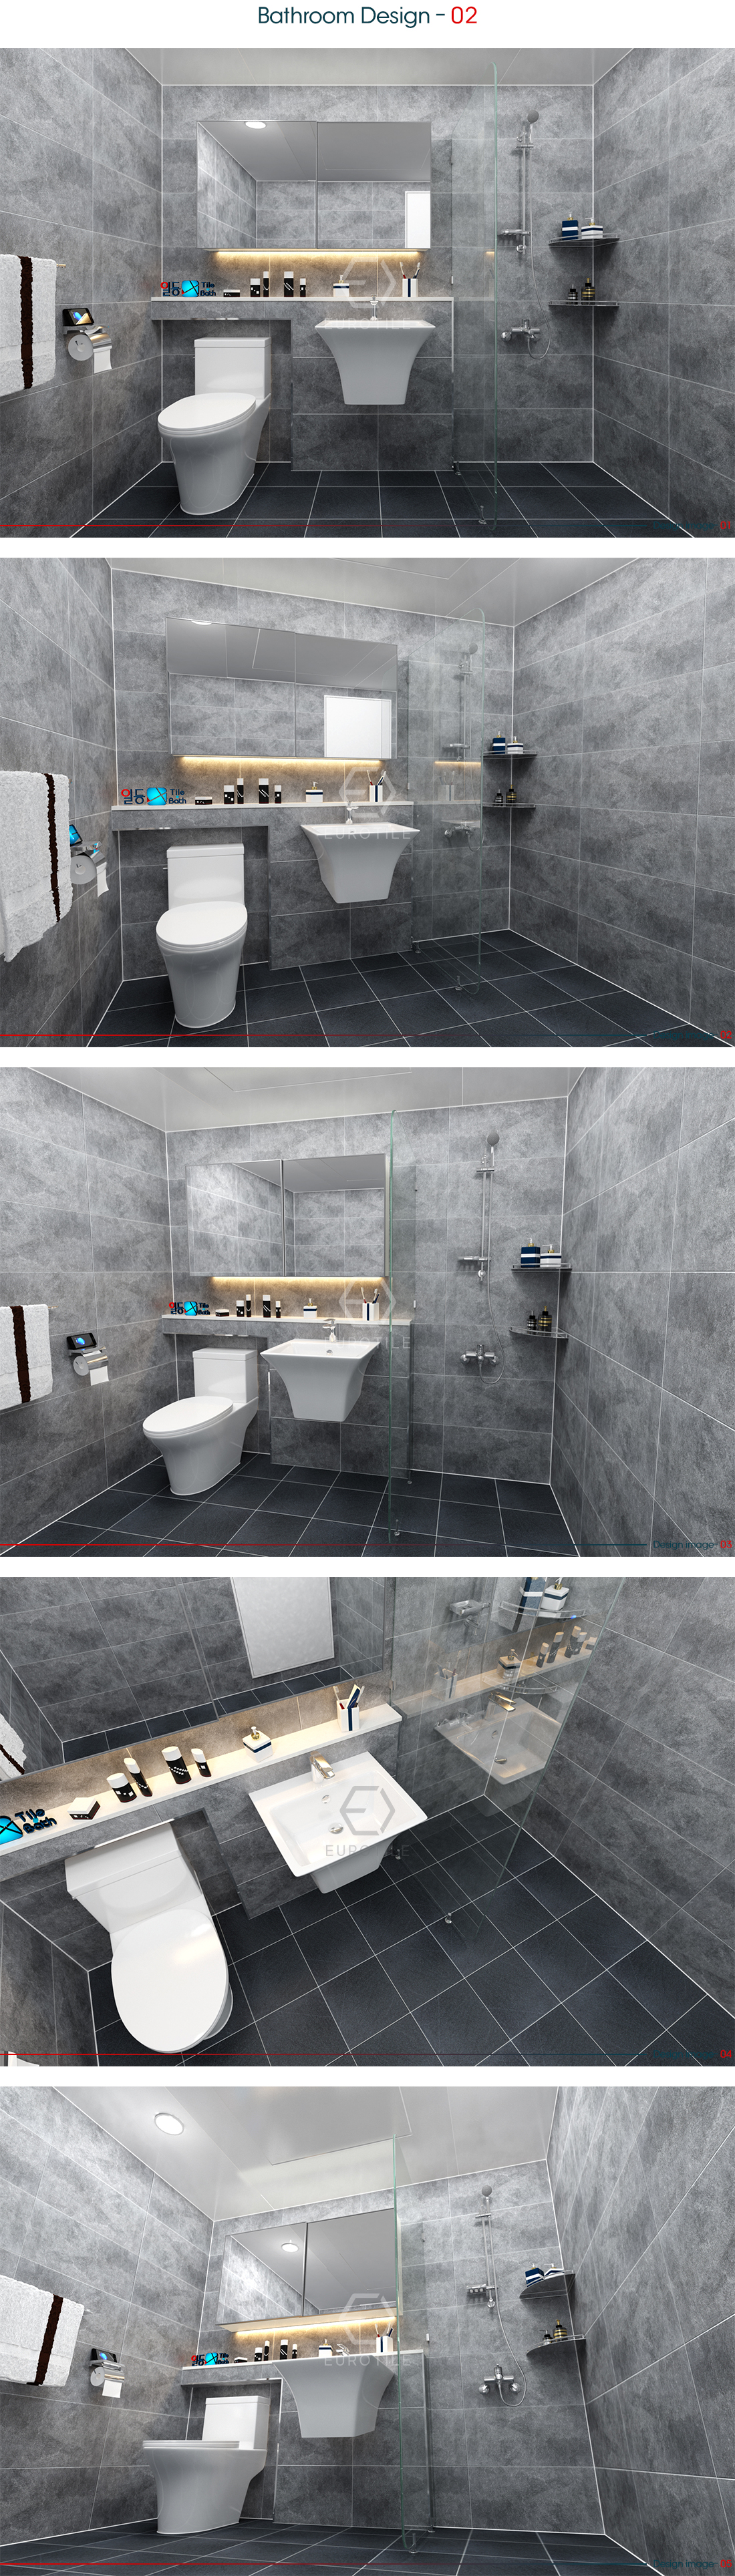 bathroomdesign-02_110019.jpg